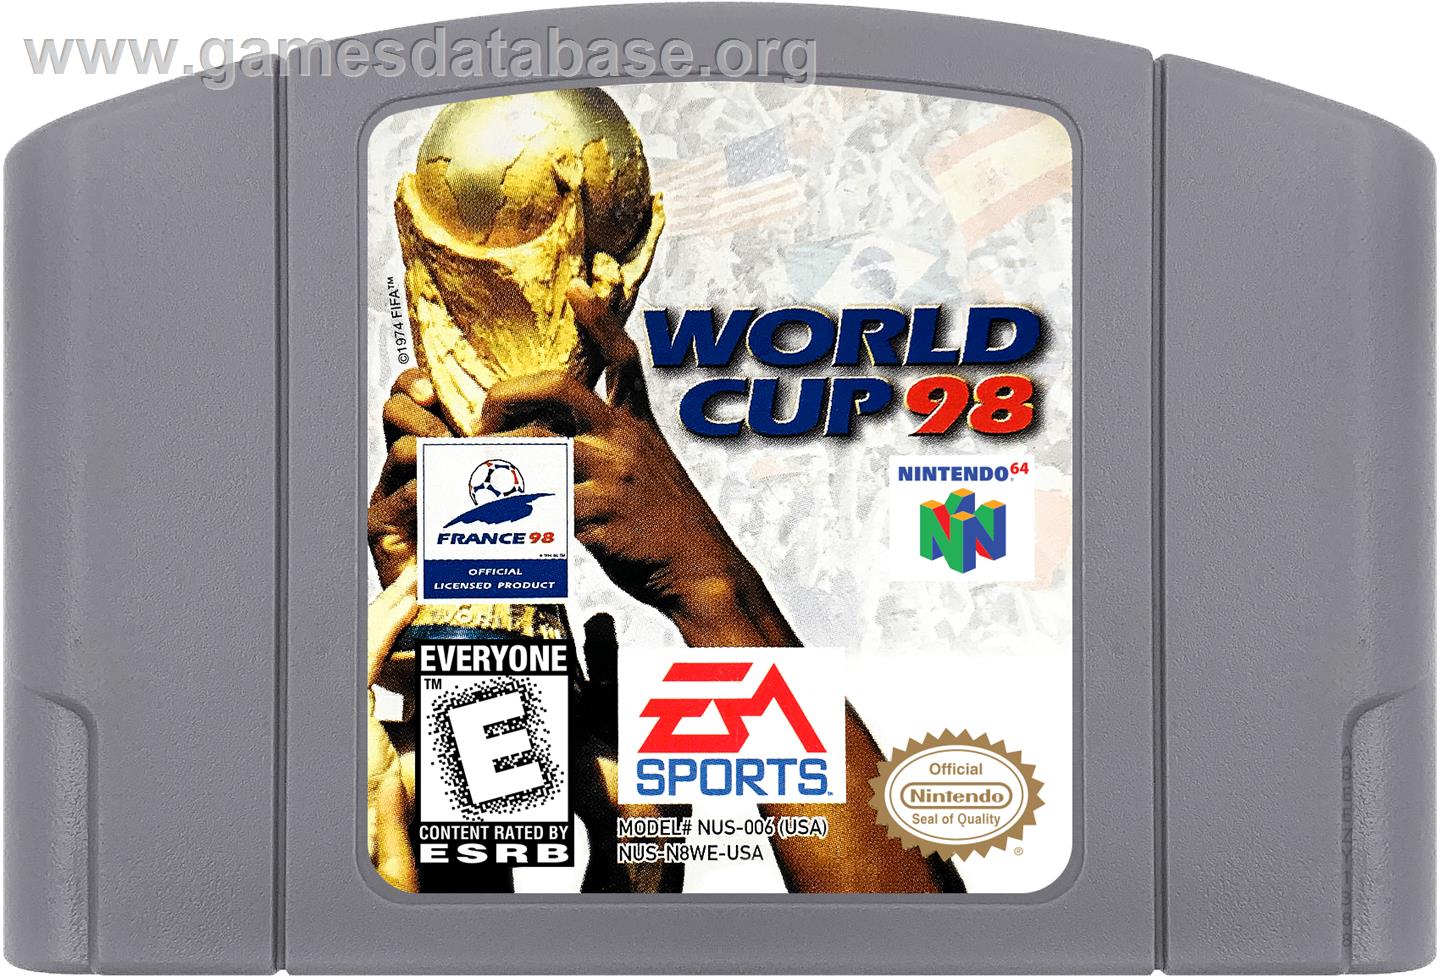 World Cup 98 - Nintendo N64 - Artwork - Cartridge